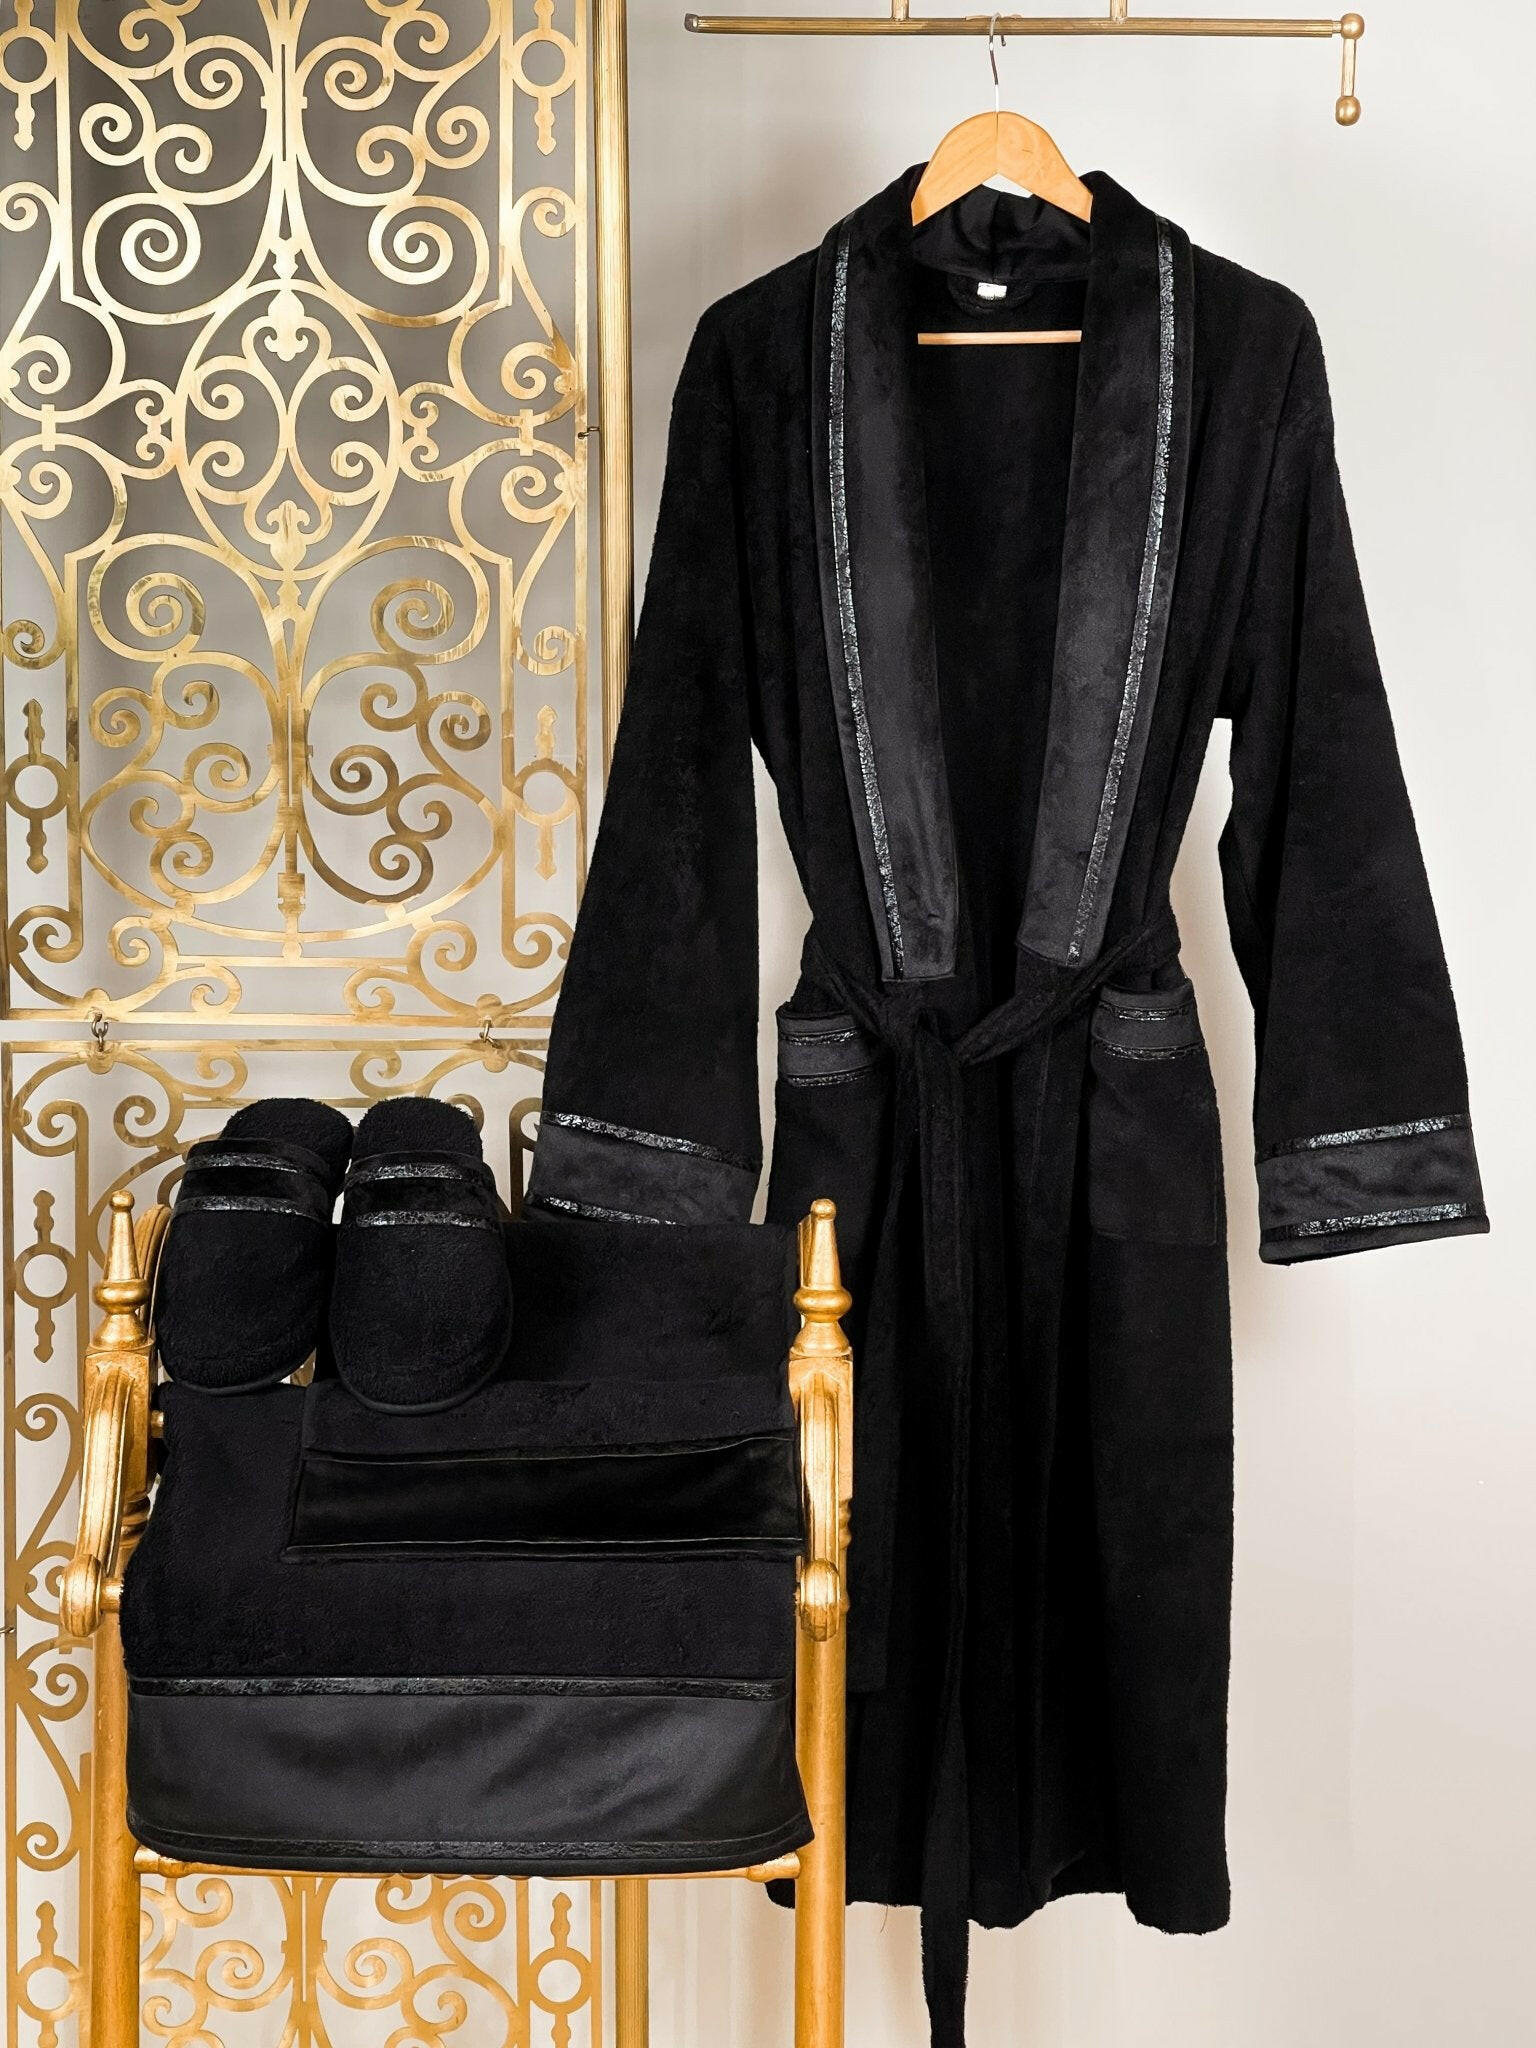 Bora Premier Luxury Men's Black Bathrobe Set, Velvet Applied Gown Robe, Slippers & Towels Set by Creative Home